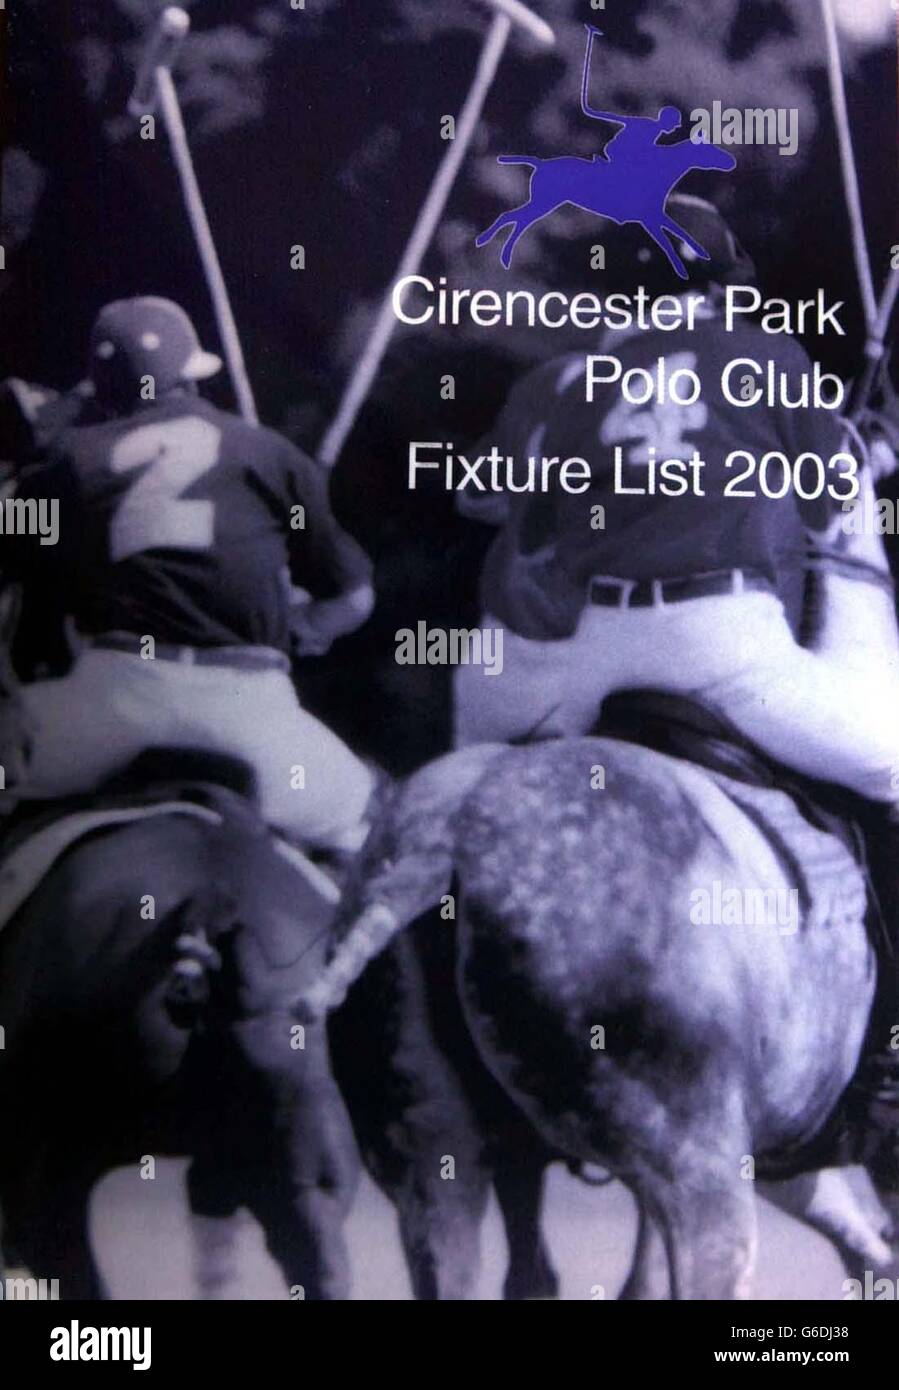 Cirencester Park Polo Club. Cirencester Park Polo Club fixture list 2003. Stock Photo